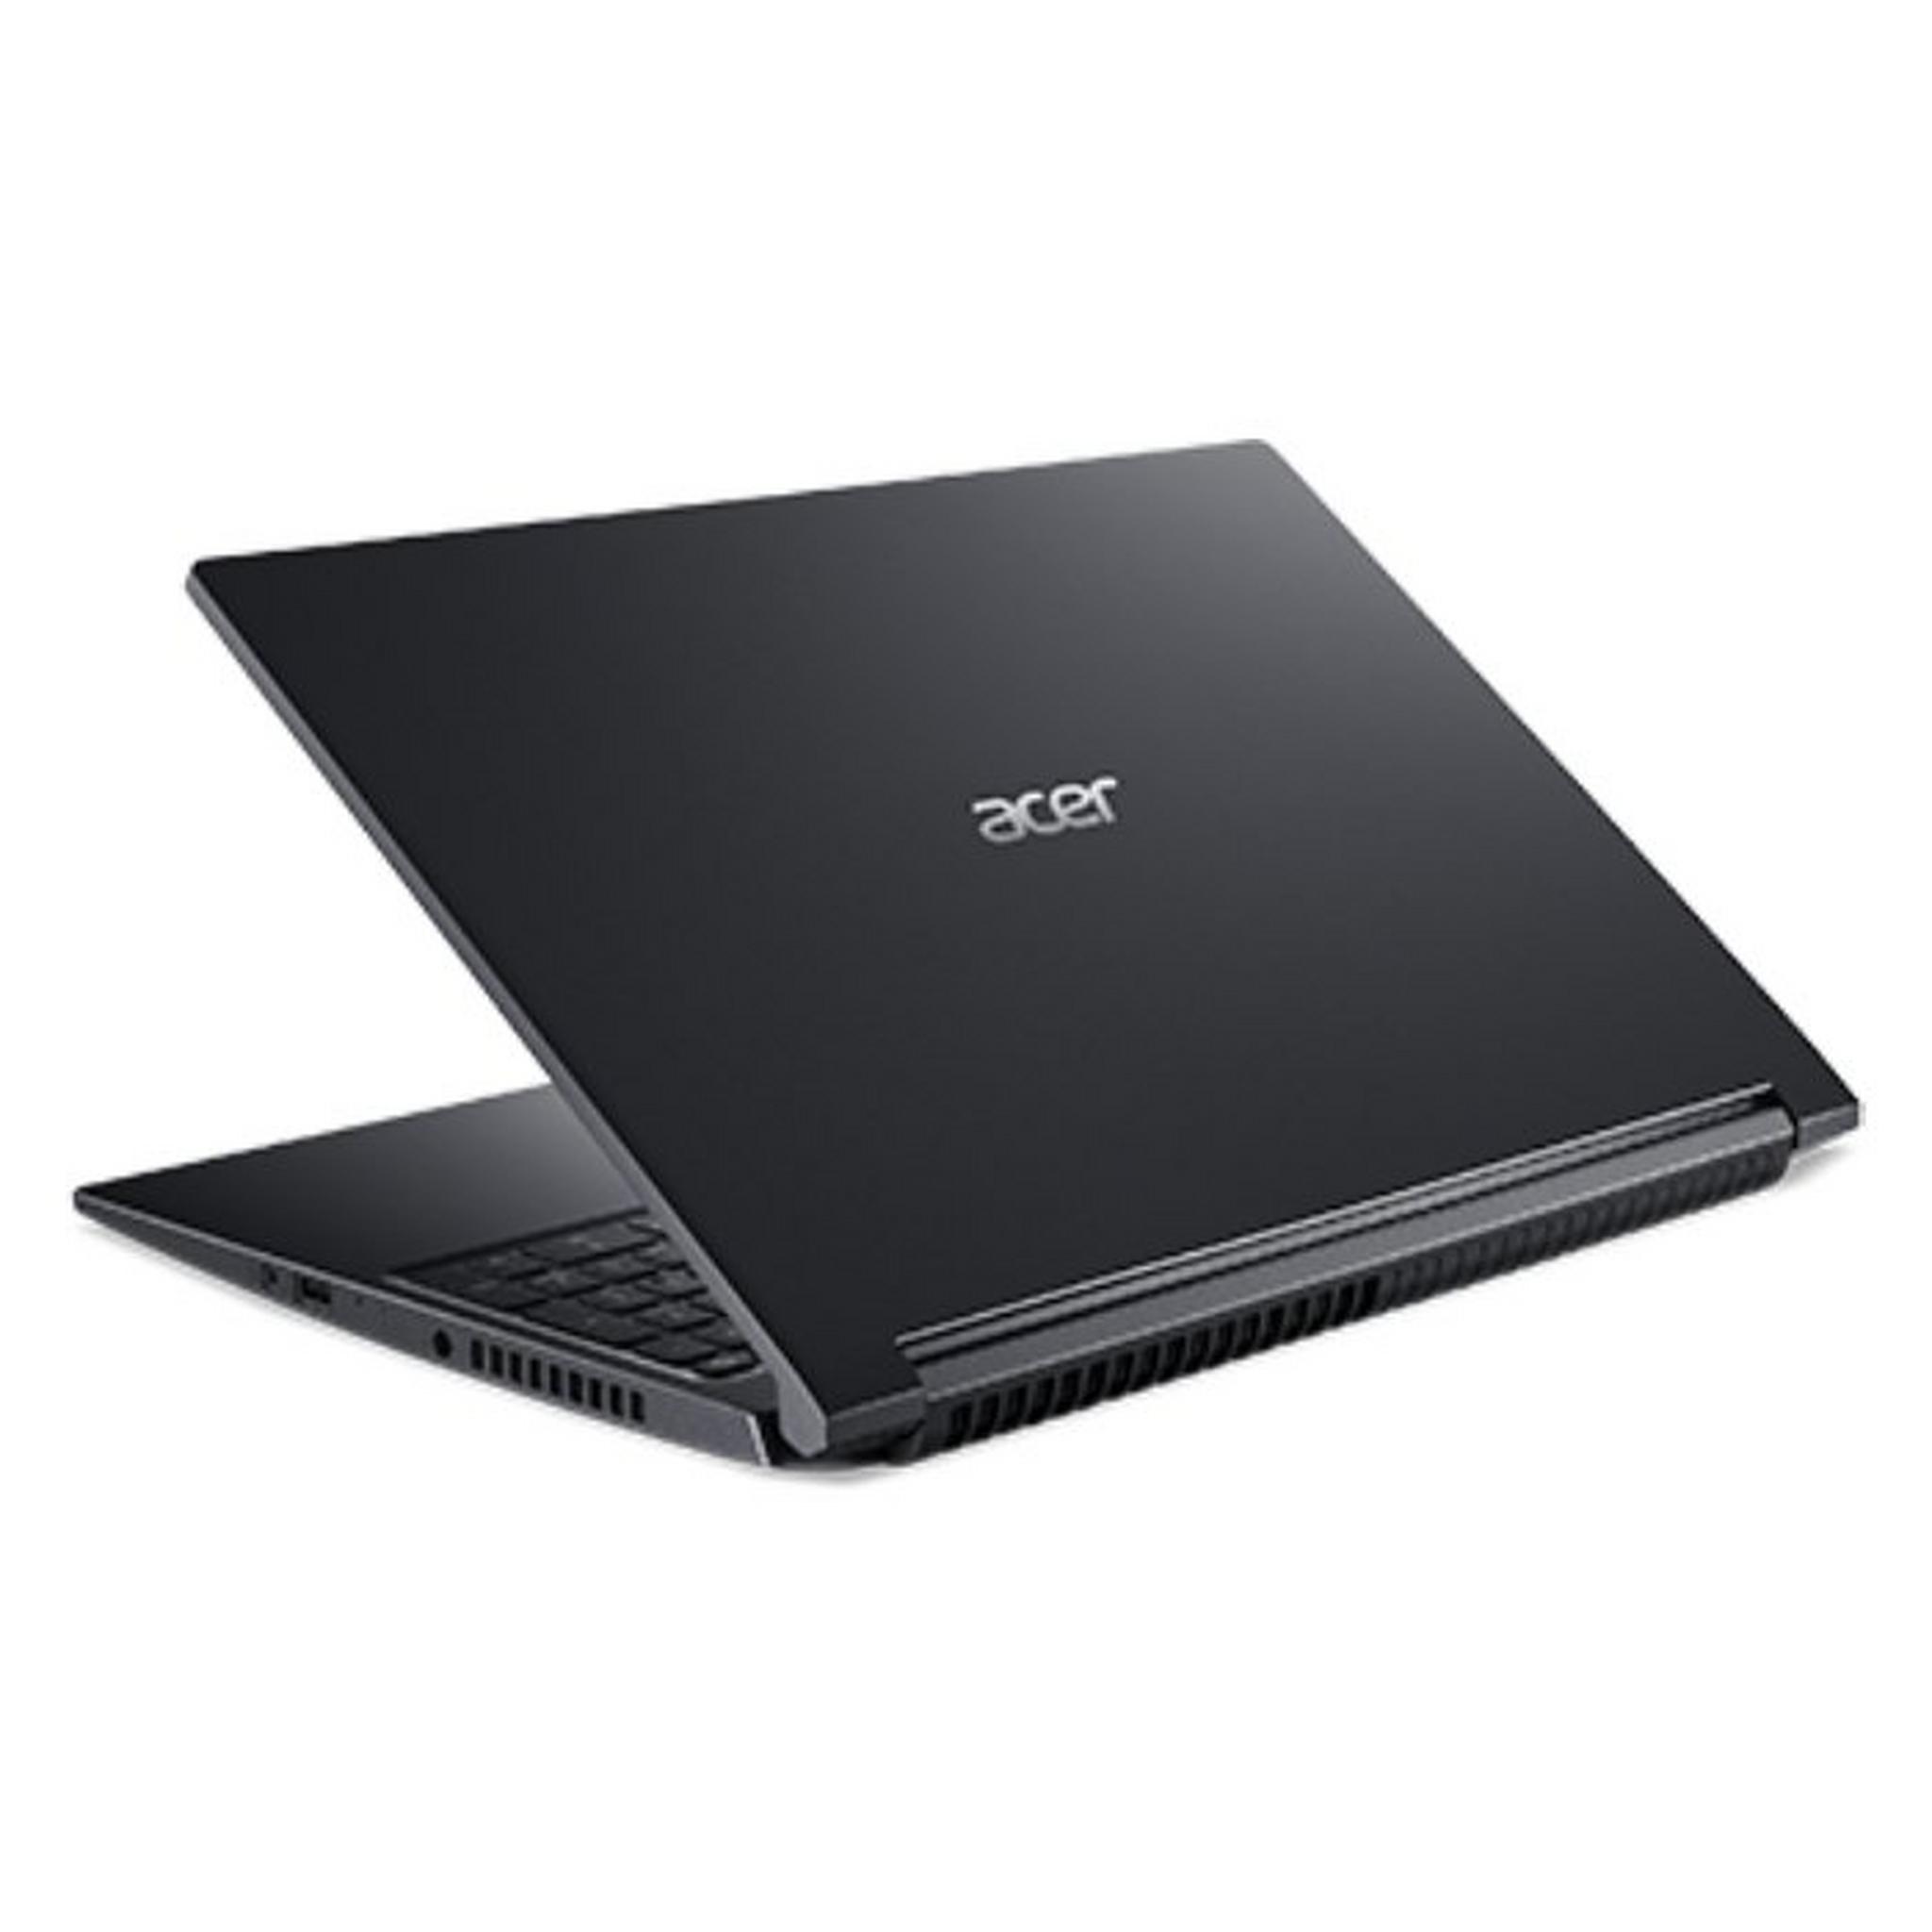 Acer Aspire 7 GeForce GTX 1650 4GB Core i5 10300H 8GB RAM 512GB SSD 15.6" Gaming Laptop - Black